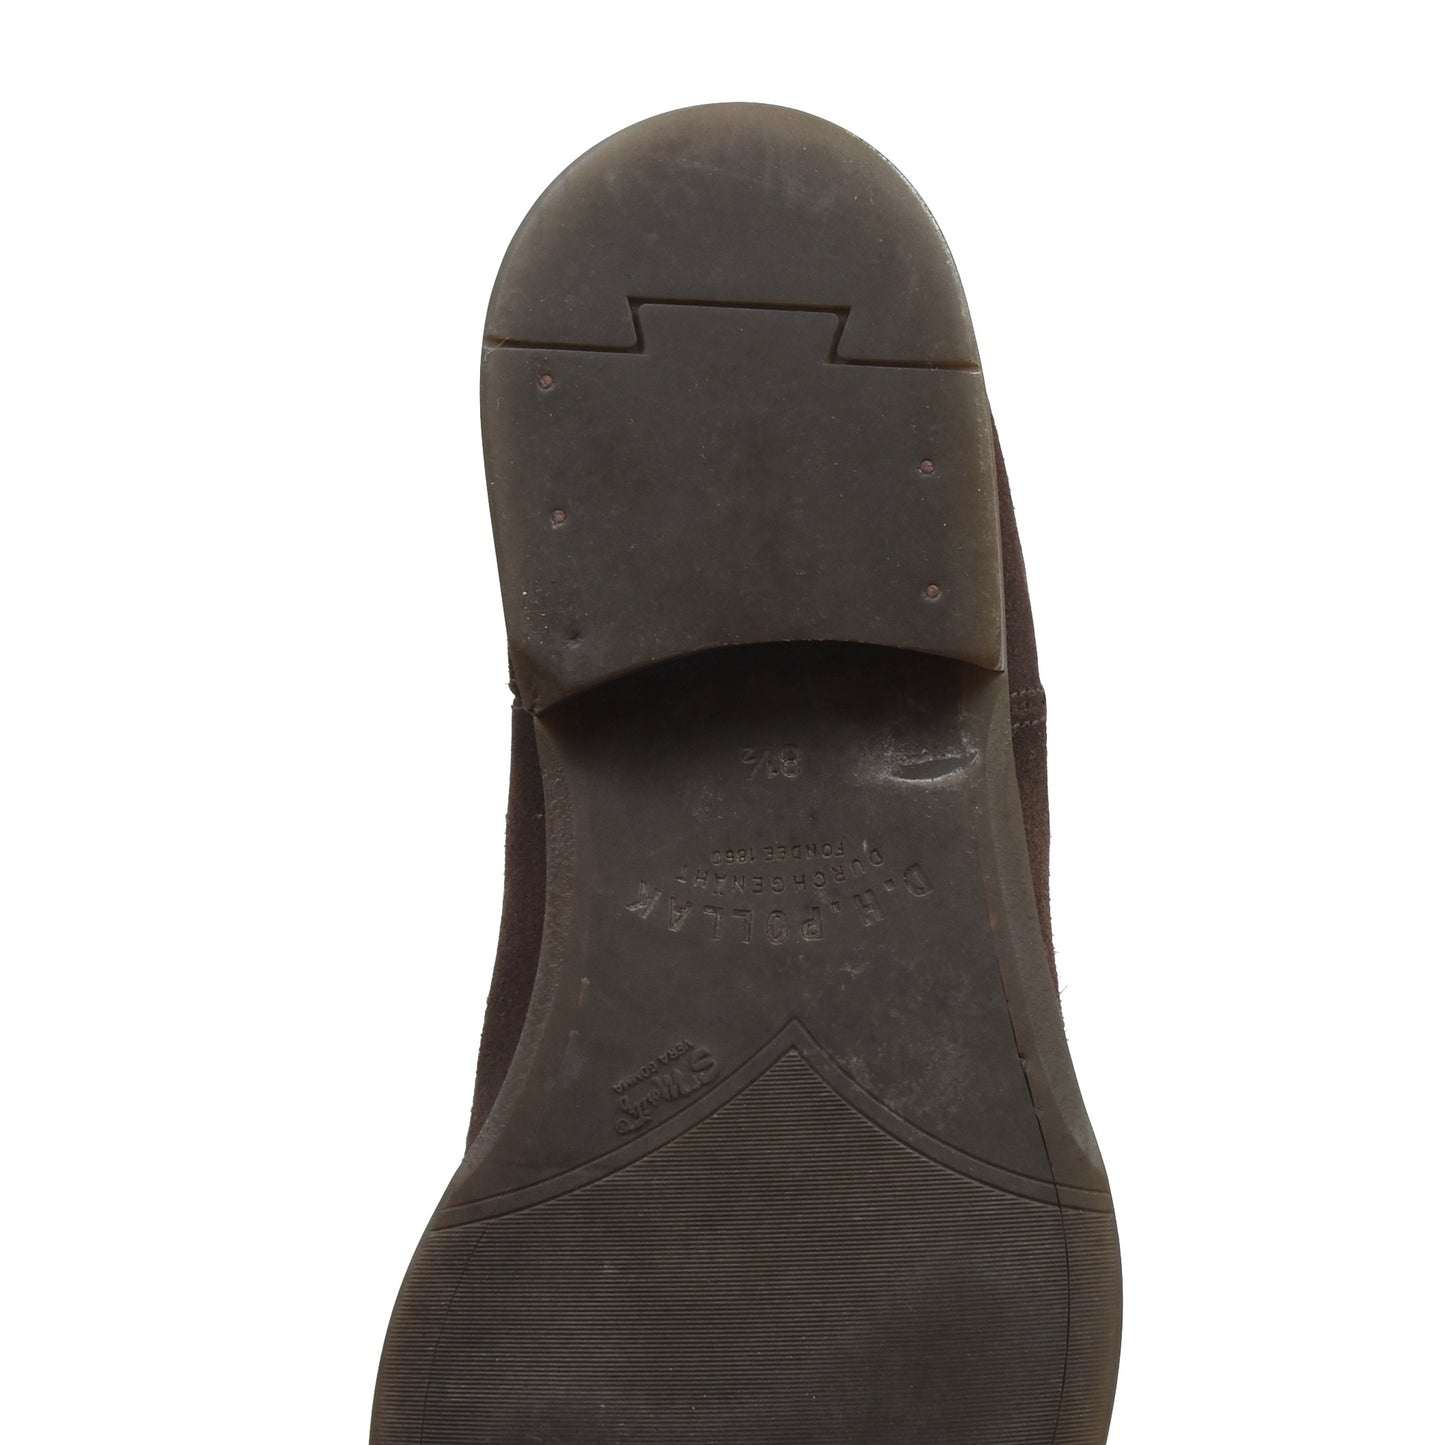 D.H. Pollak Chelsea Boots Size 8.5 - Brown